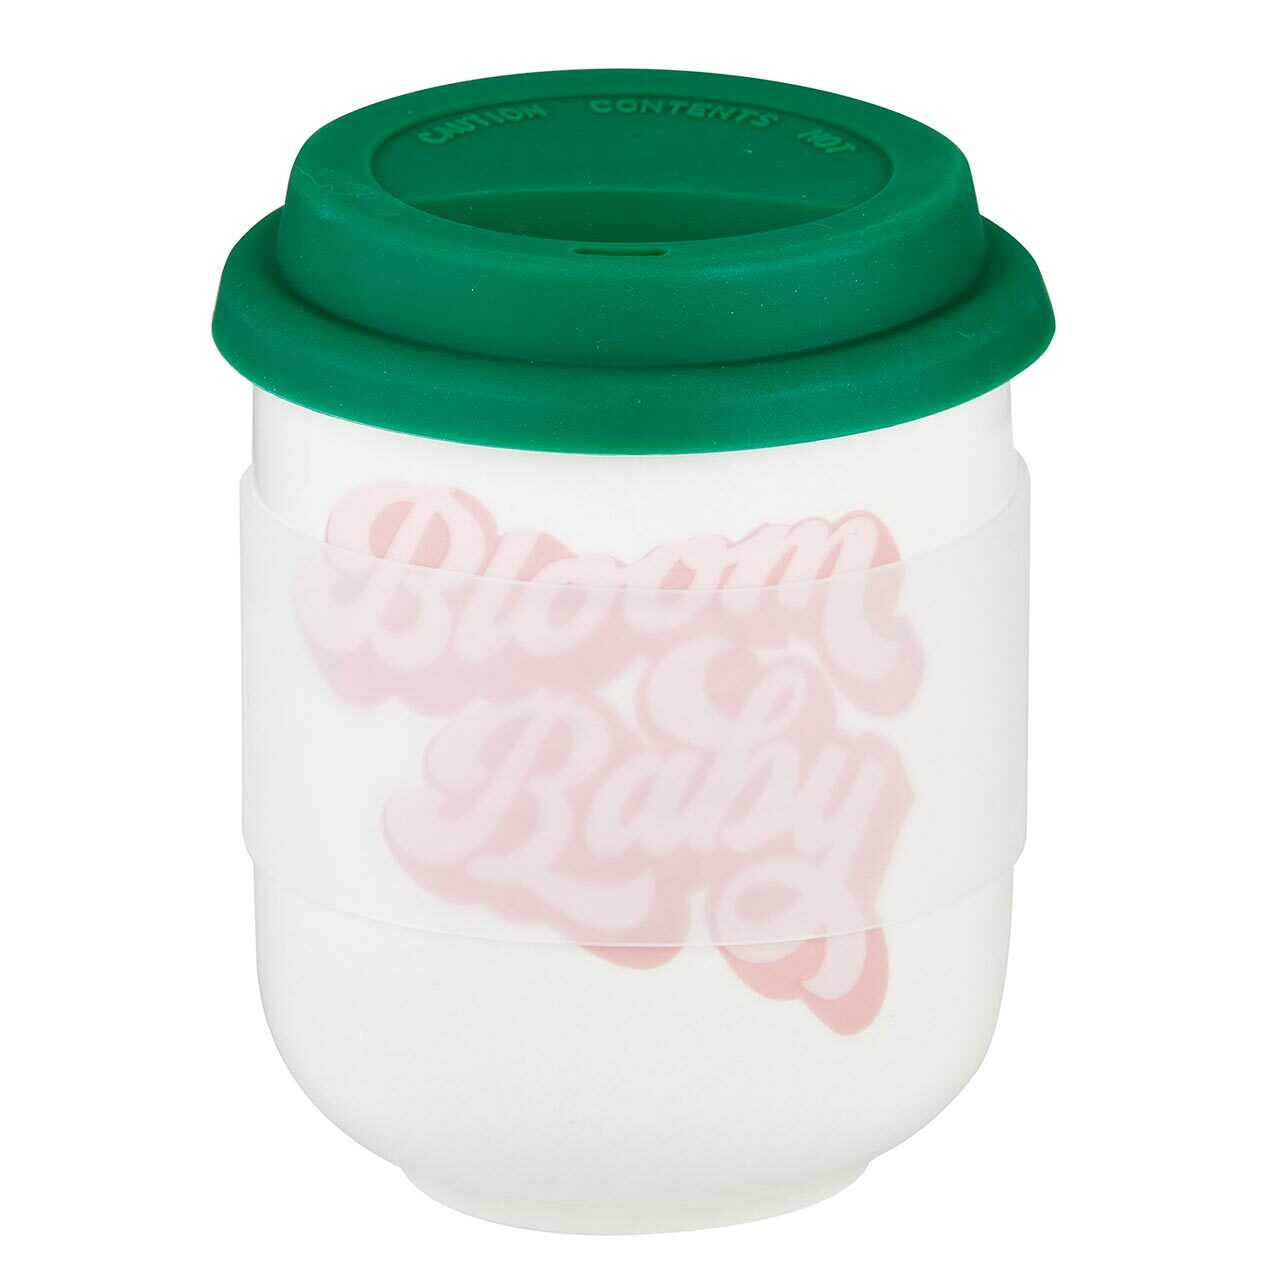 Bloom Baby Ceramic To Go Mug | Holds 16 oz. | Eco Mug with Silicone Lid and Sleeve